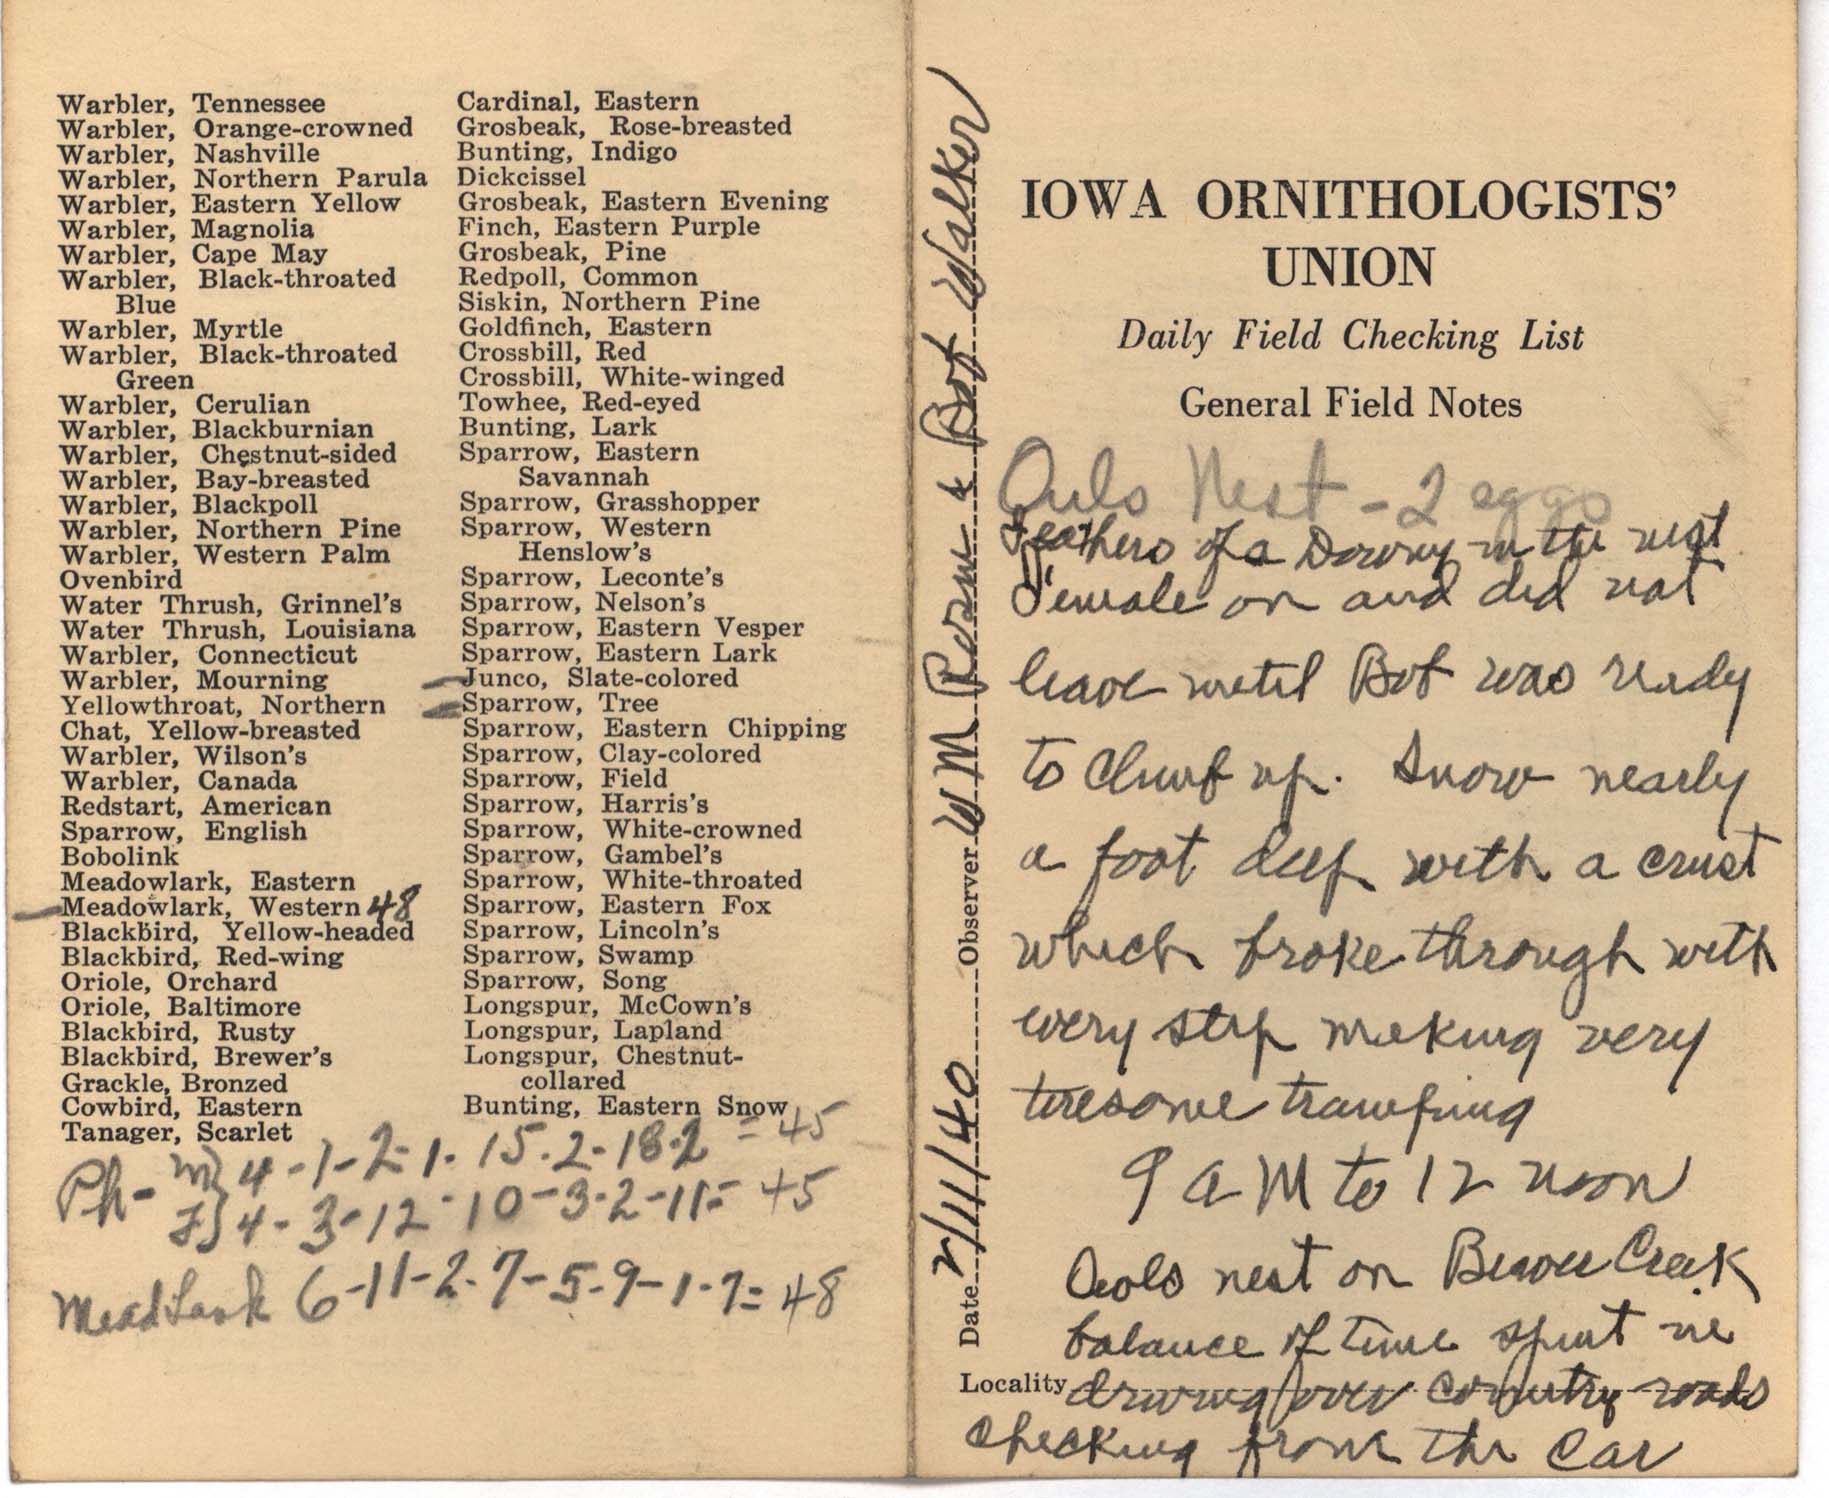 Daily field checking list by Walter Rosene, February 11, 1940